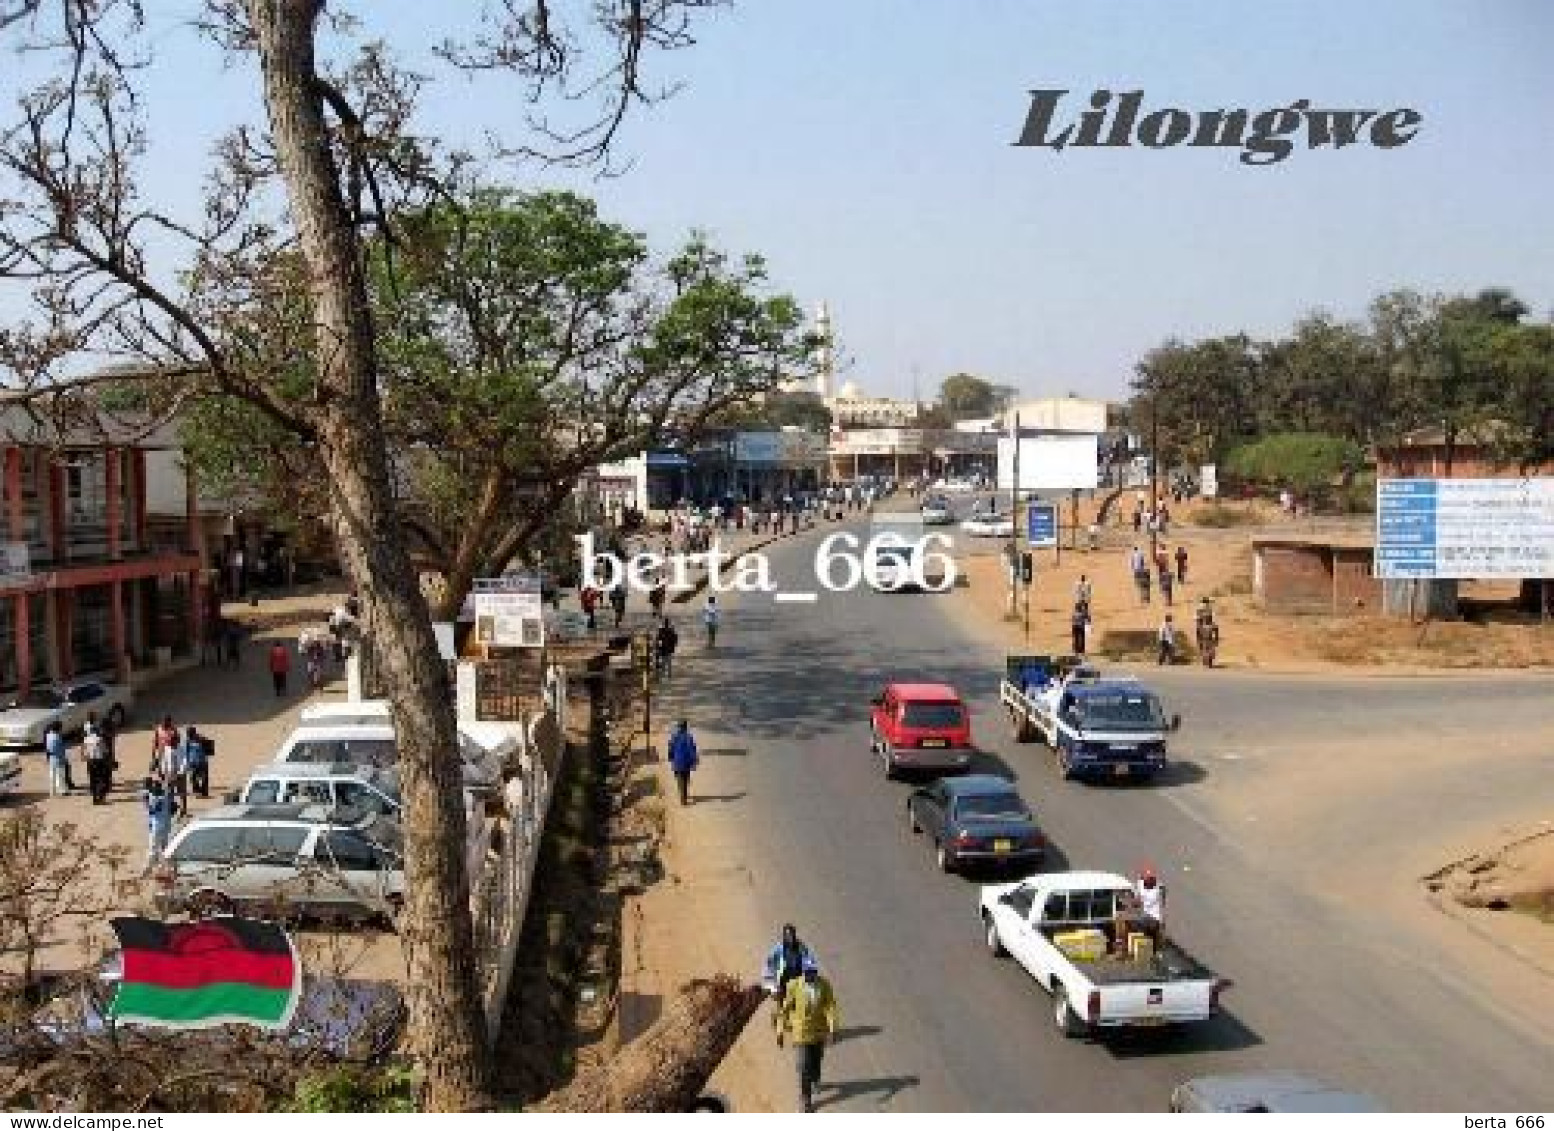 Malawi Lilongwe Street View New Postcard - Malawi